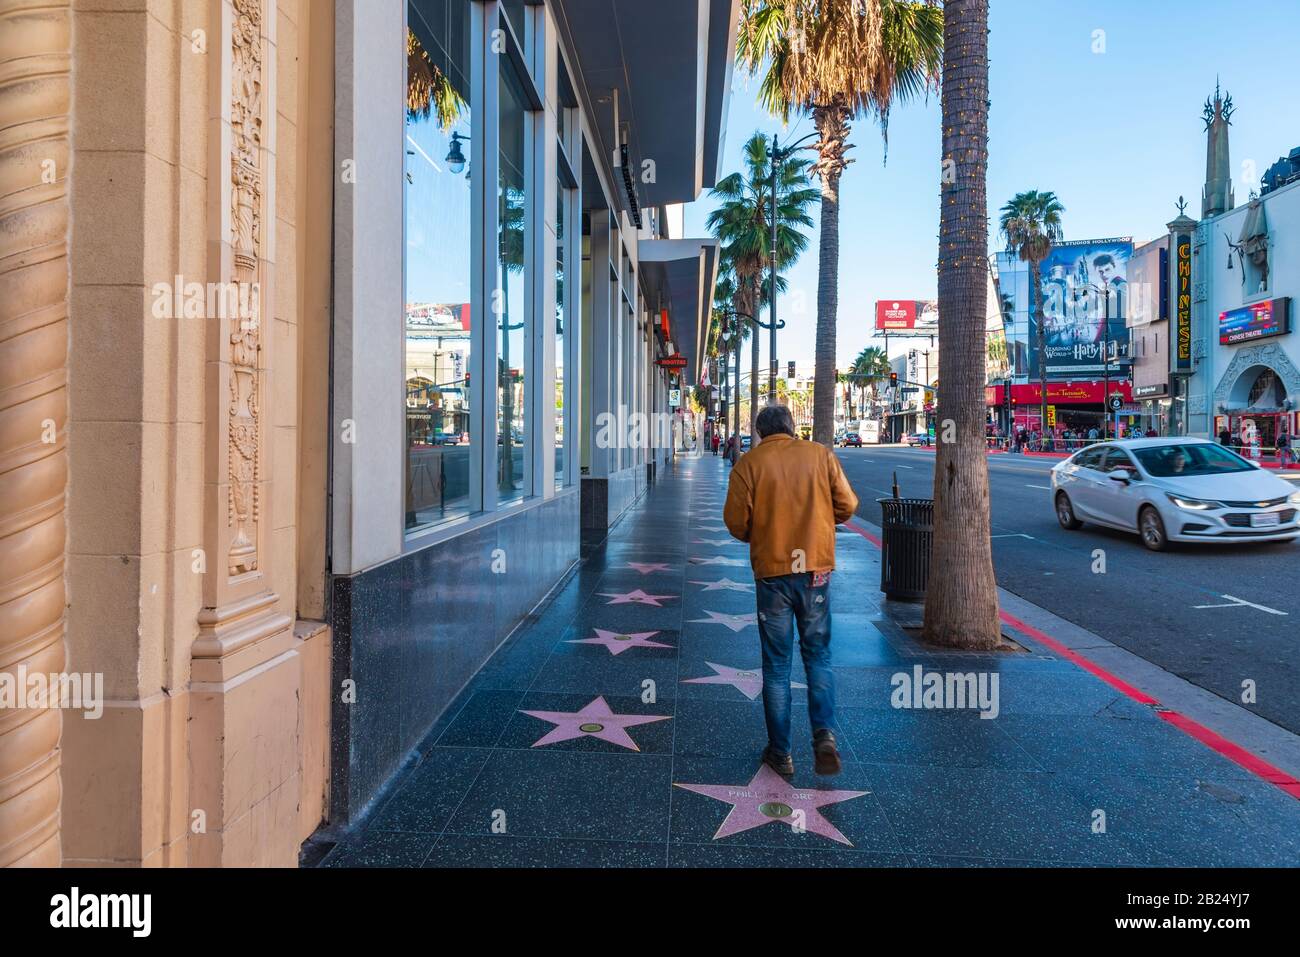 Los Angeles, Kalifornien - 8. Februar 2019: Ein Mann geht auf dem berühmten Walk Of Fame in Hollywood entlang Stockfoto